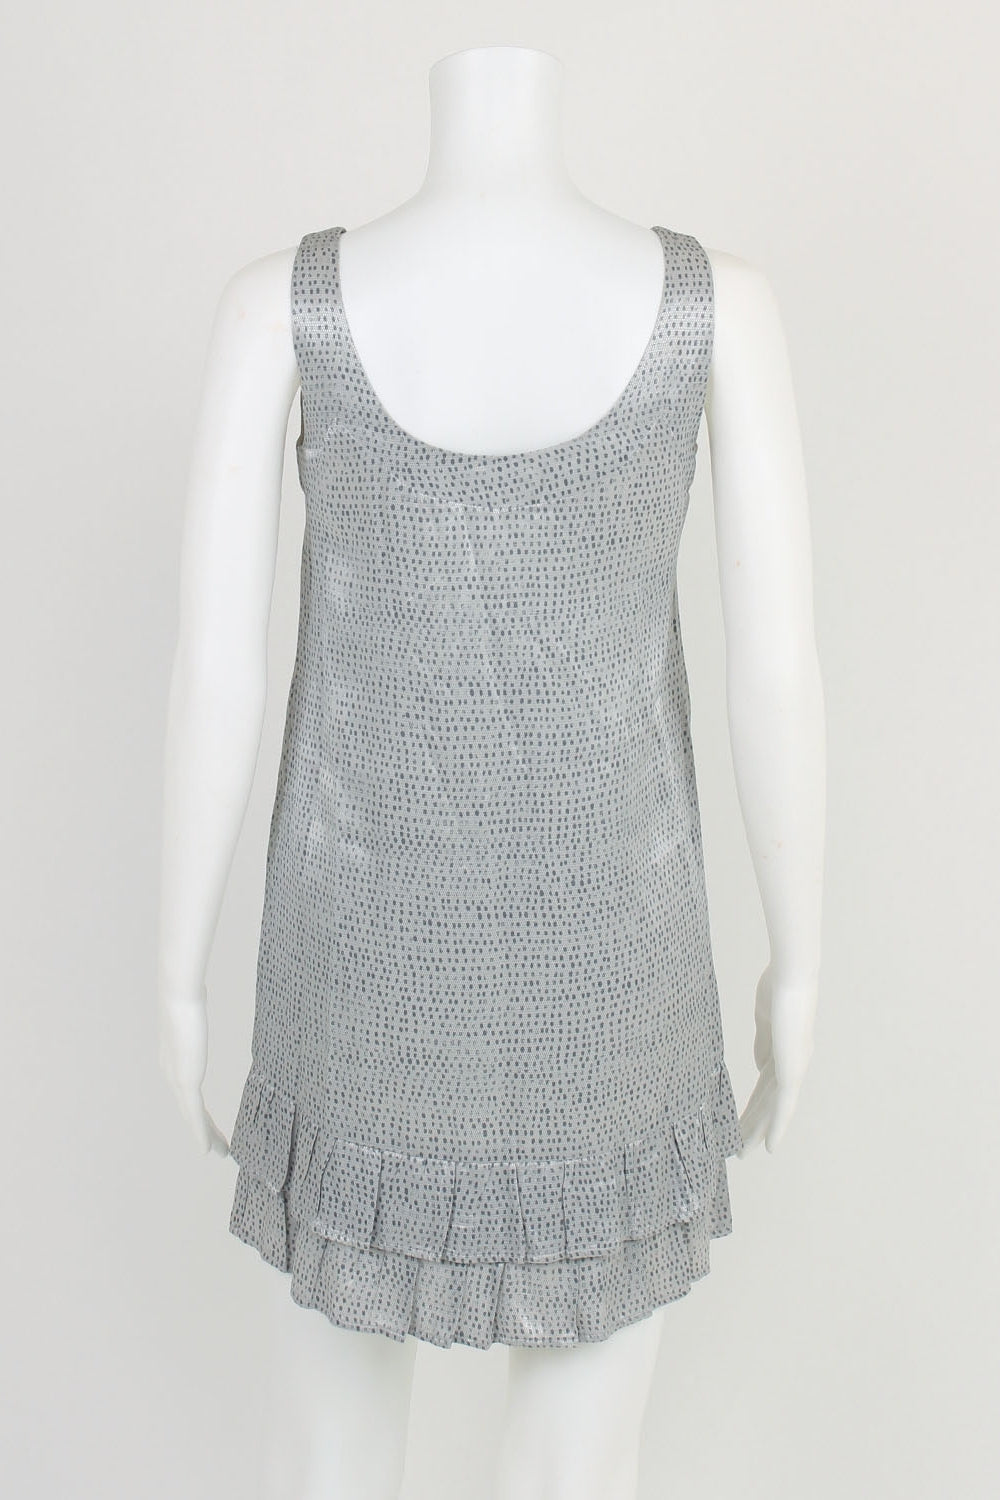 Bec &amp; Bridge Silver Dress 6